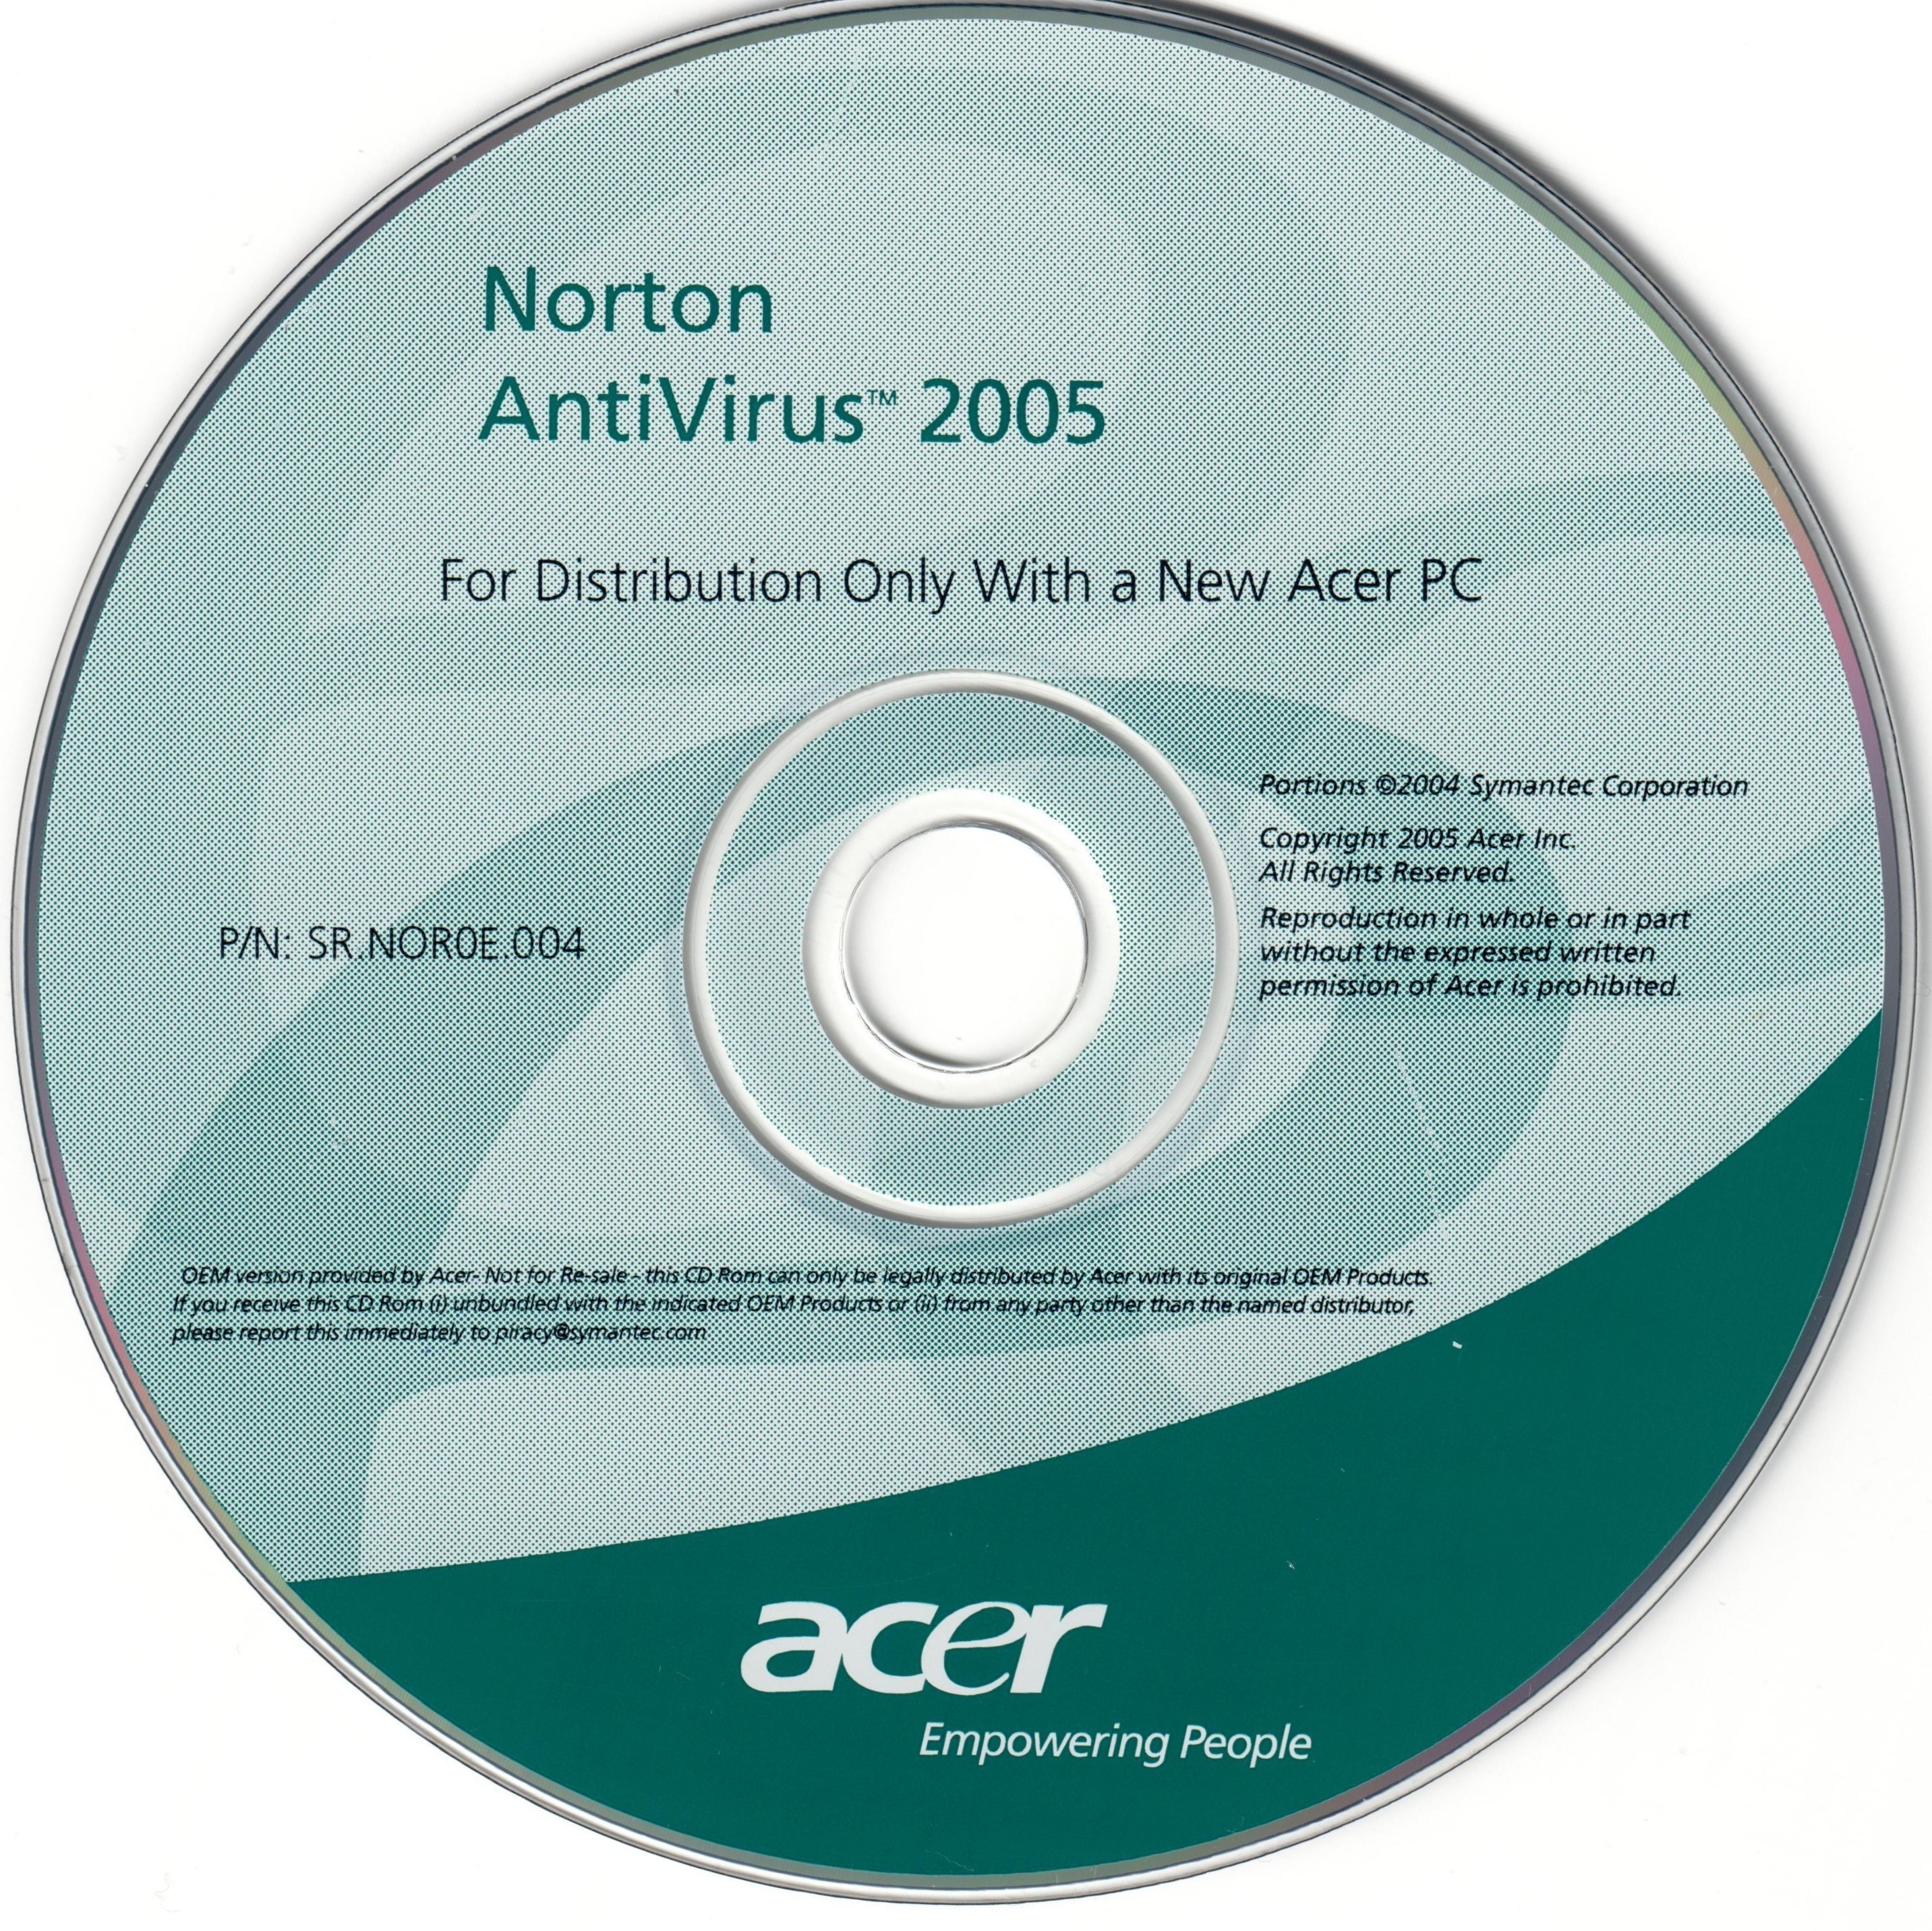 versione completa gratuita di norton antivirus 2010